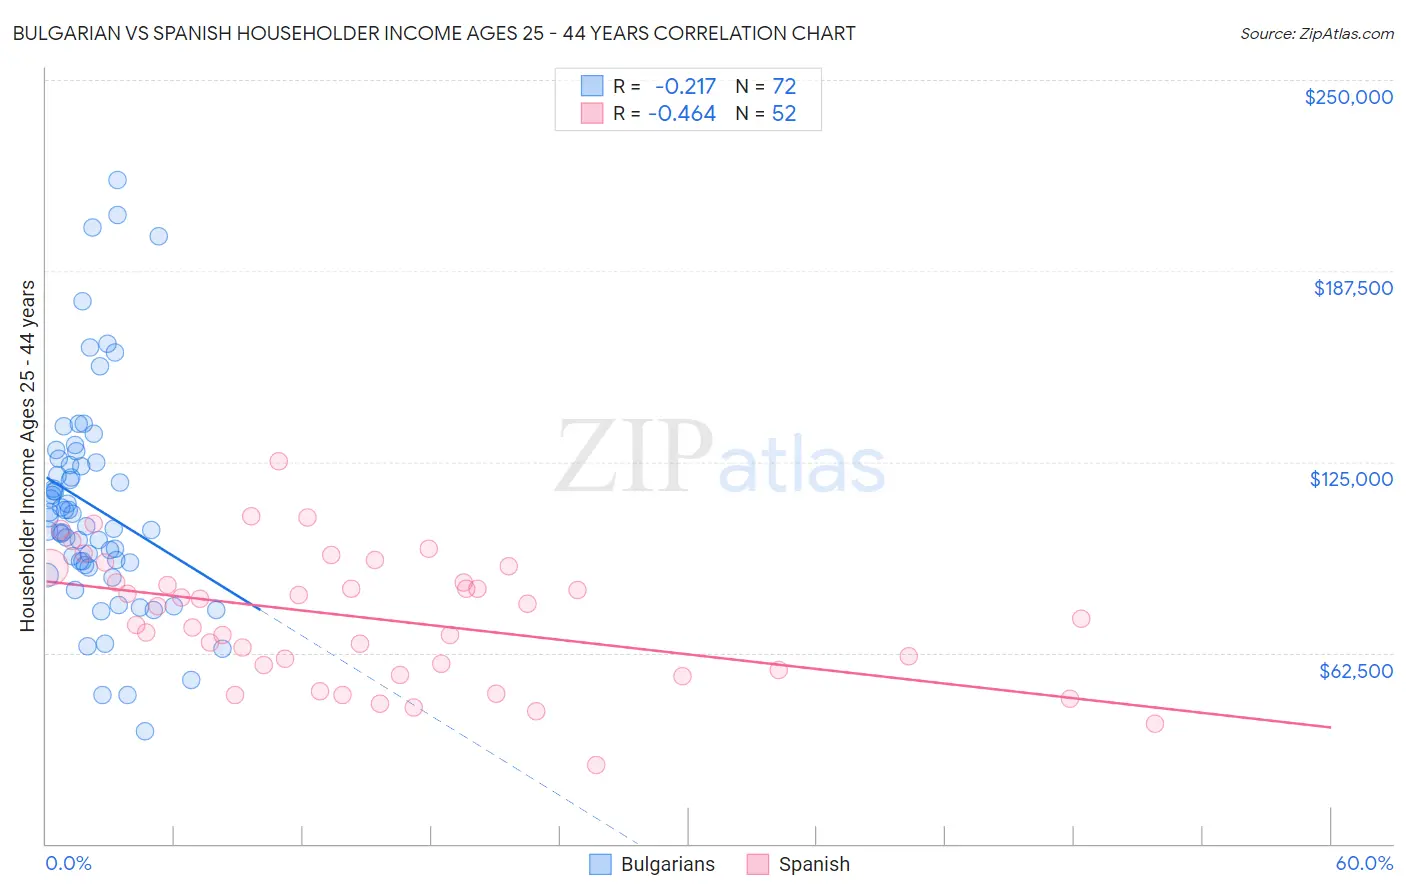 Bulgarian vs Spanish Householder Income Ages 25 - 44 years